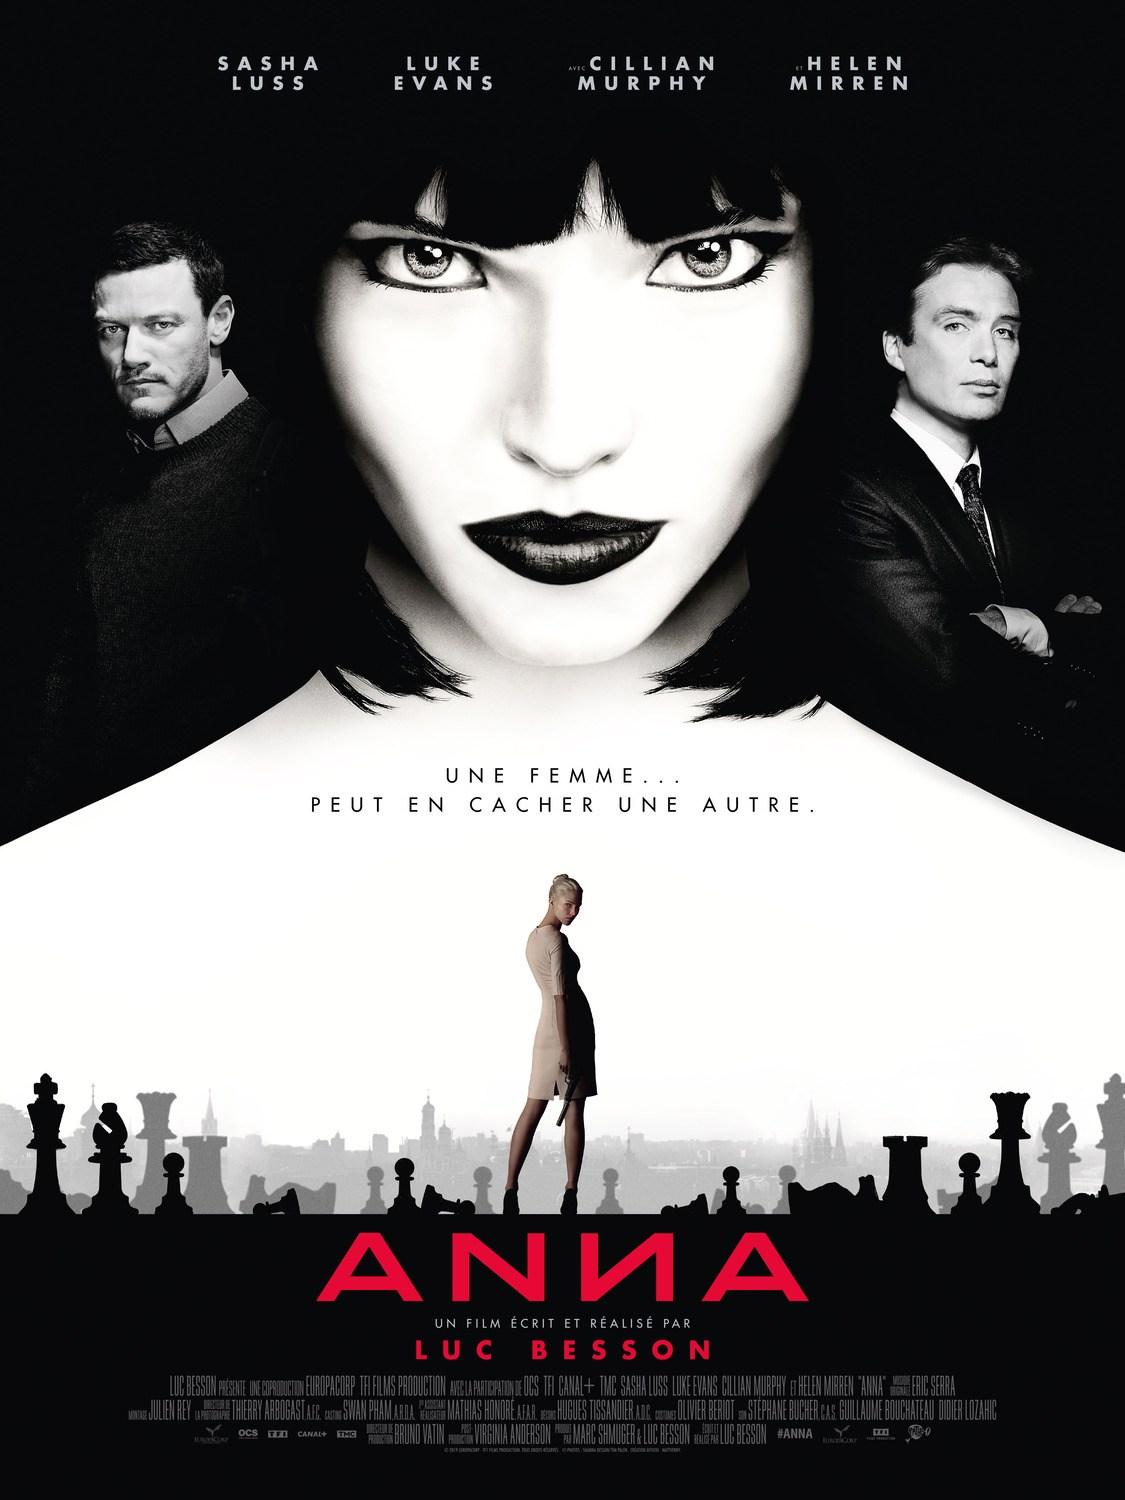 and Poster of Anna starring Sasha Luss, Helen Mirren, Cillian